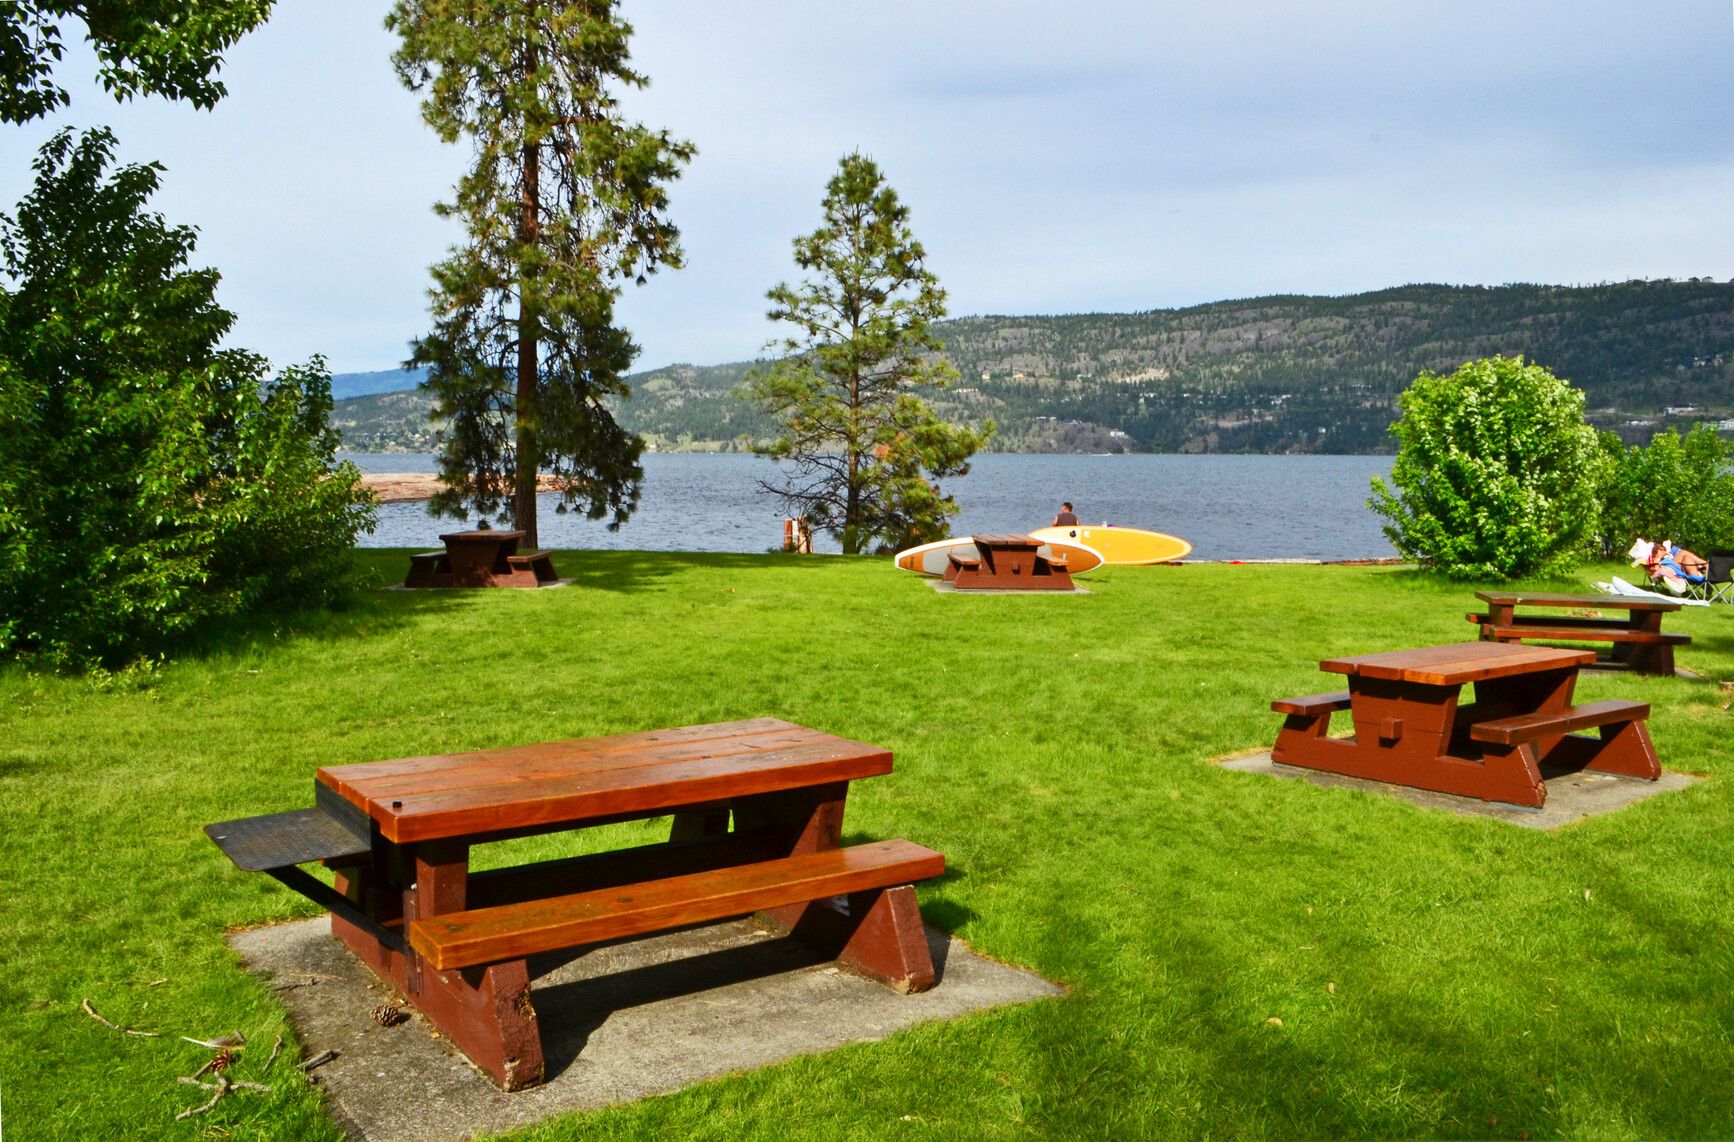 Day-use picnic area beside Okanagan Lake in Bear Creek Park.